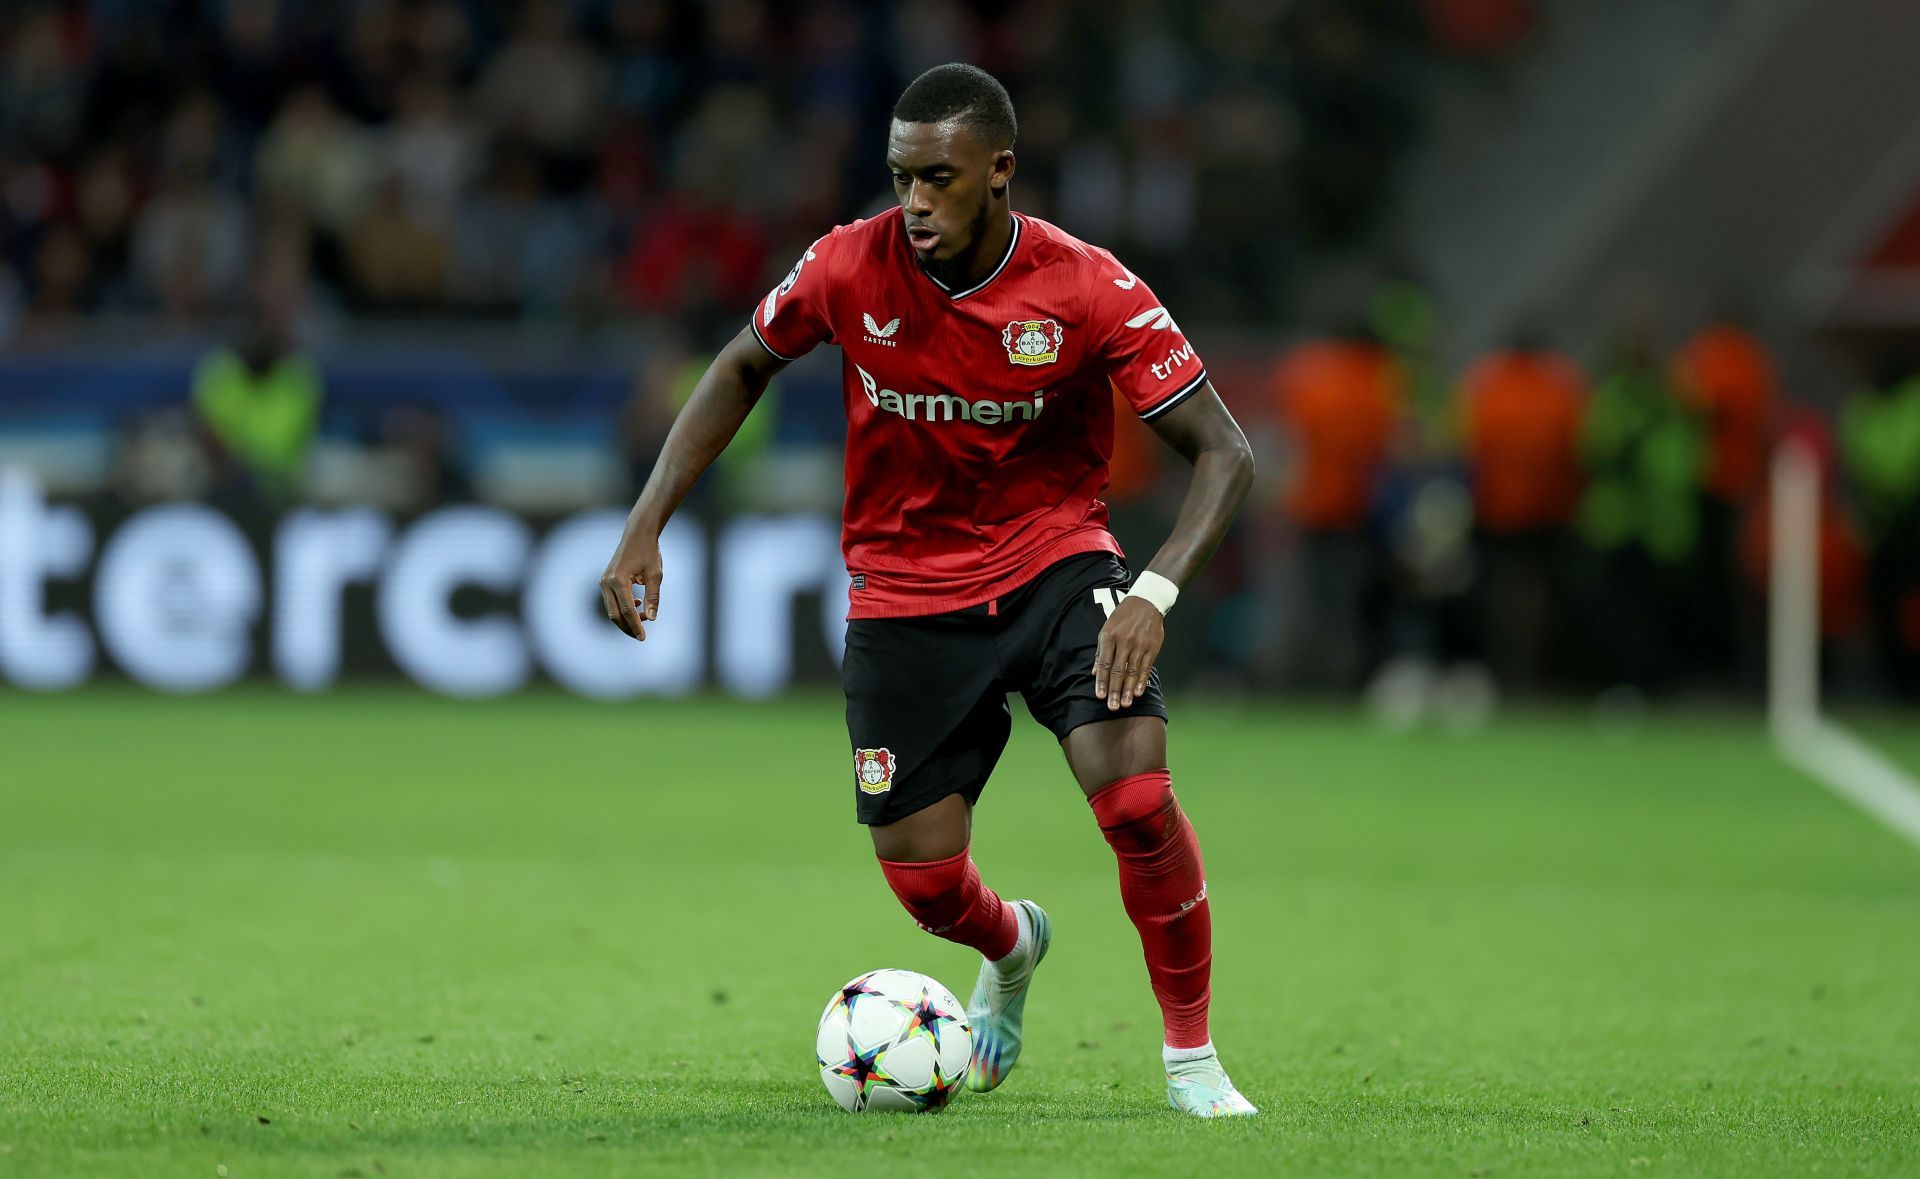 Hudson-Odoi is currently on loan at Bayer Leverkusen